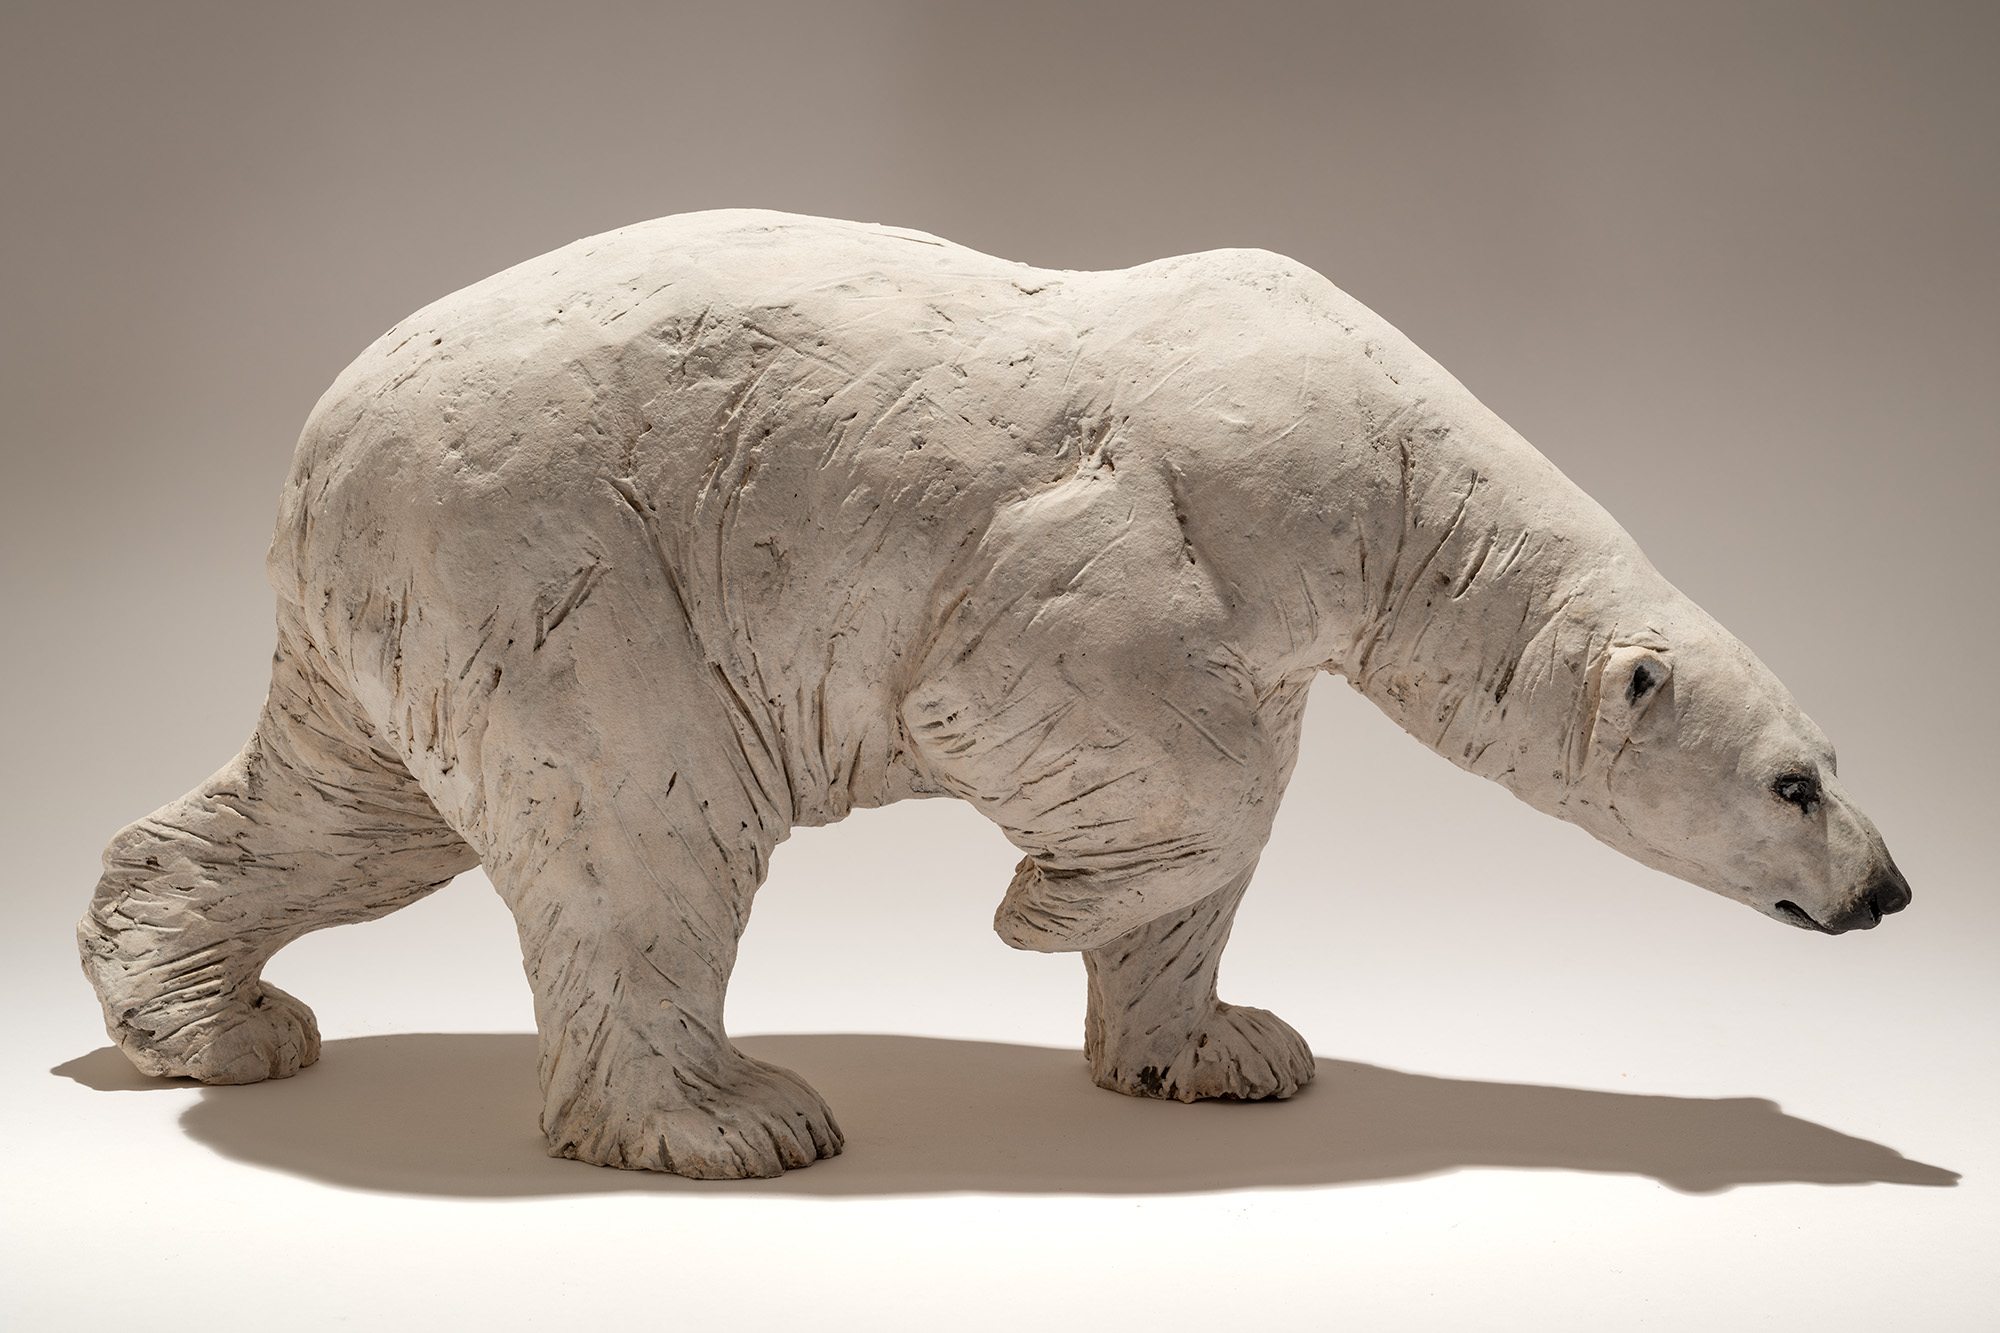 Polar Bear Sculpture